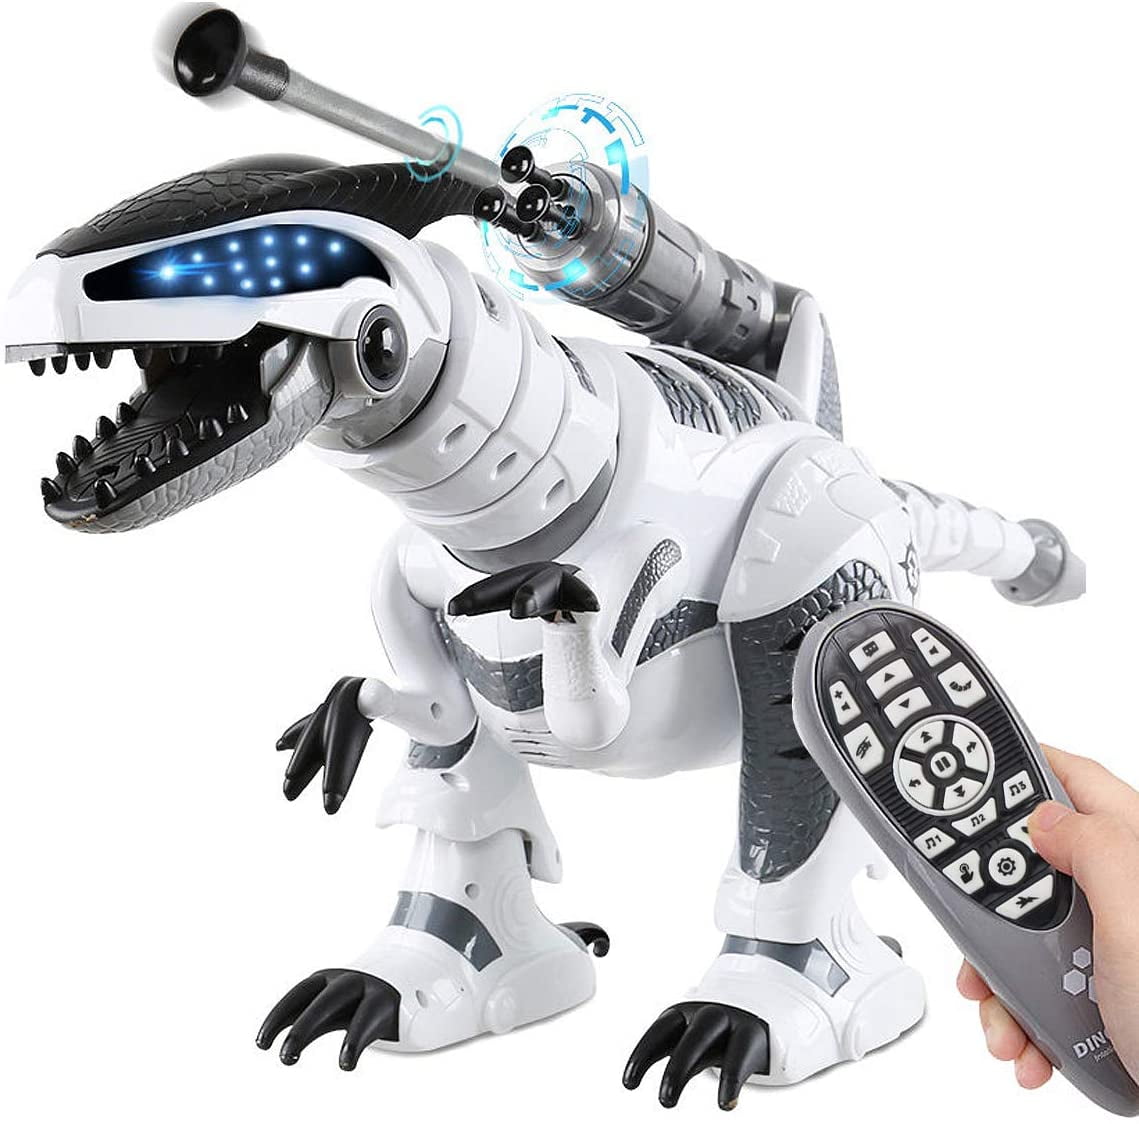 Cool Electric Walking Dinosaur Toy Robot w/ Sound Light Moving Kids Gift #2 